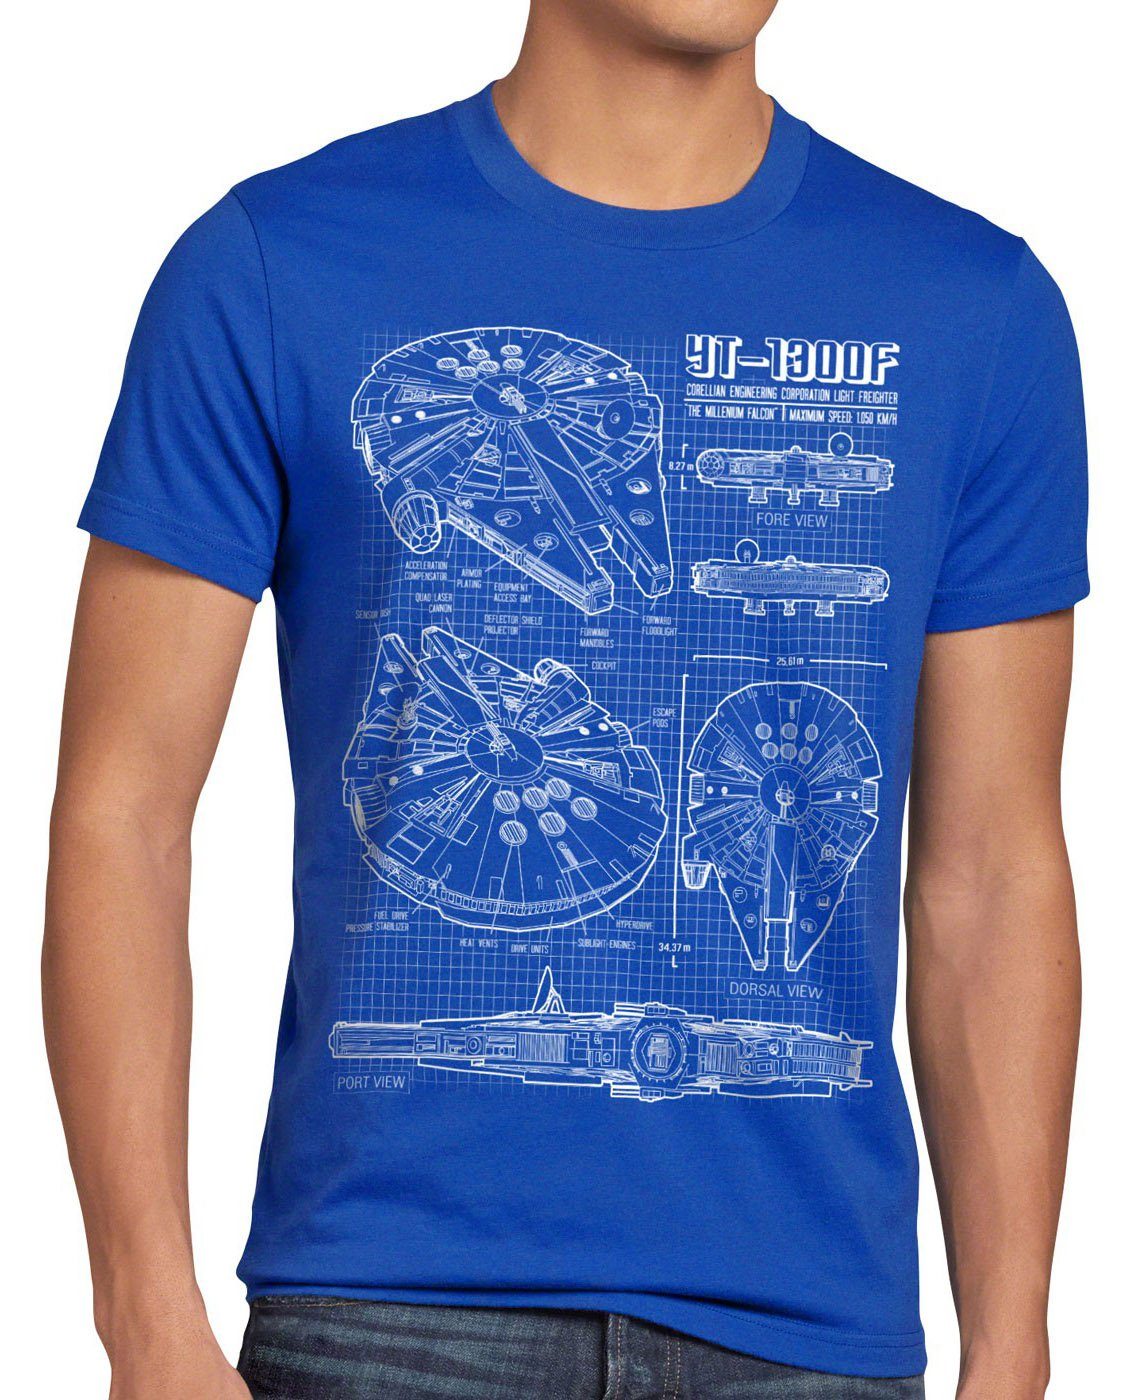 style3 Print-Shirt Herren T-Shirt blau wars sterne star der Falcon rasender luke Millennium krieg falke